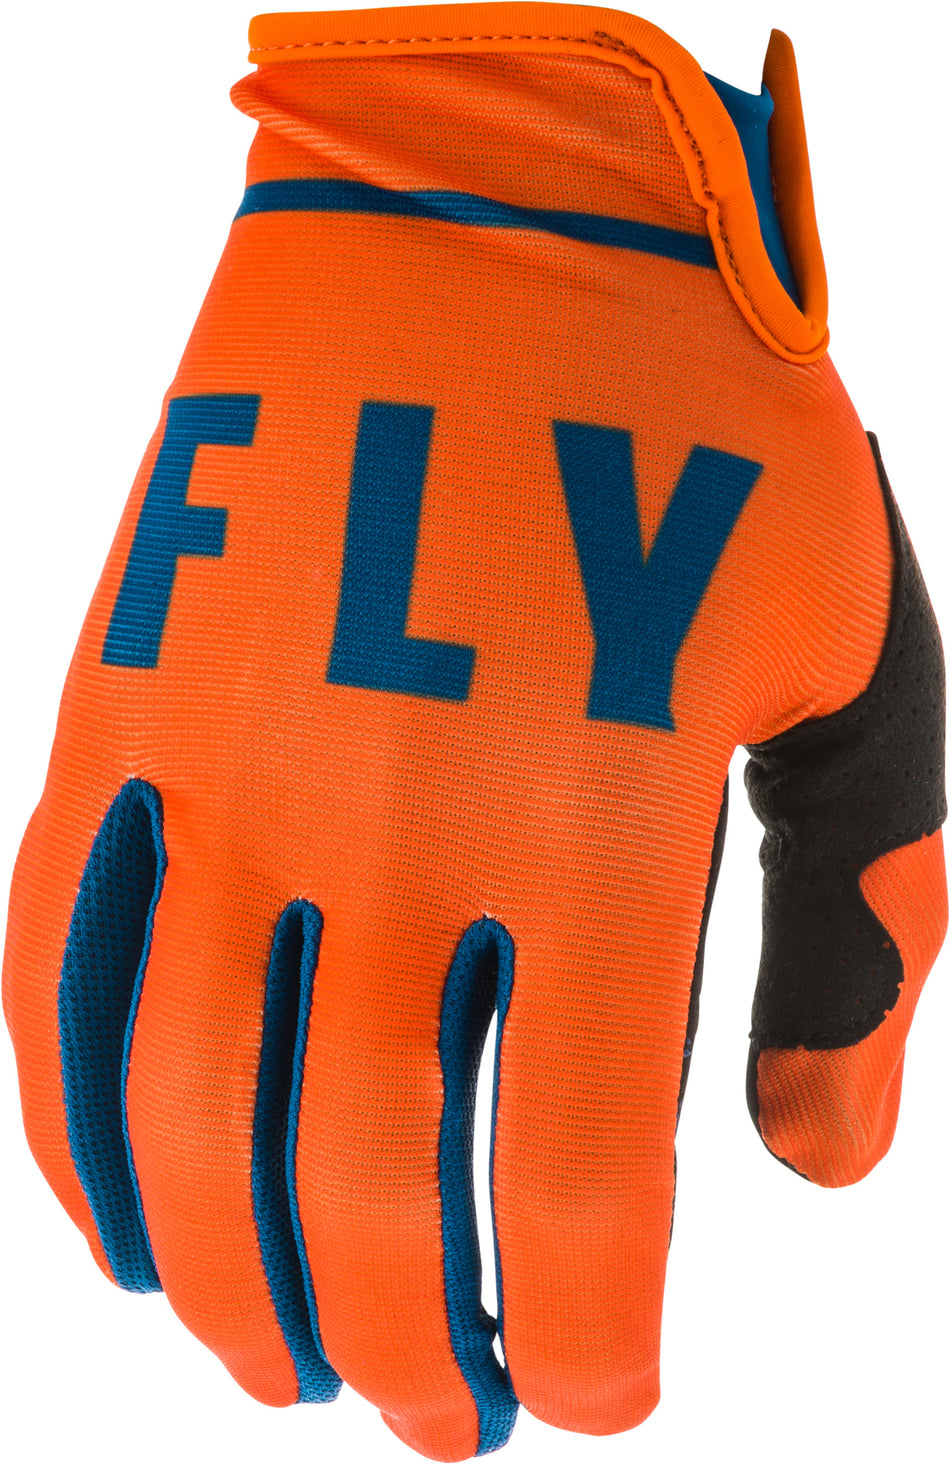 FLY RACING Lite Gloves Orange/Navy Sz 11 373-71311